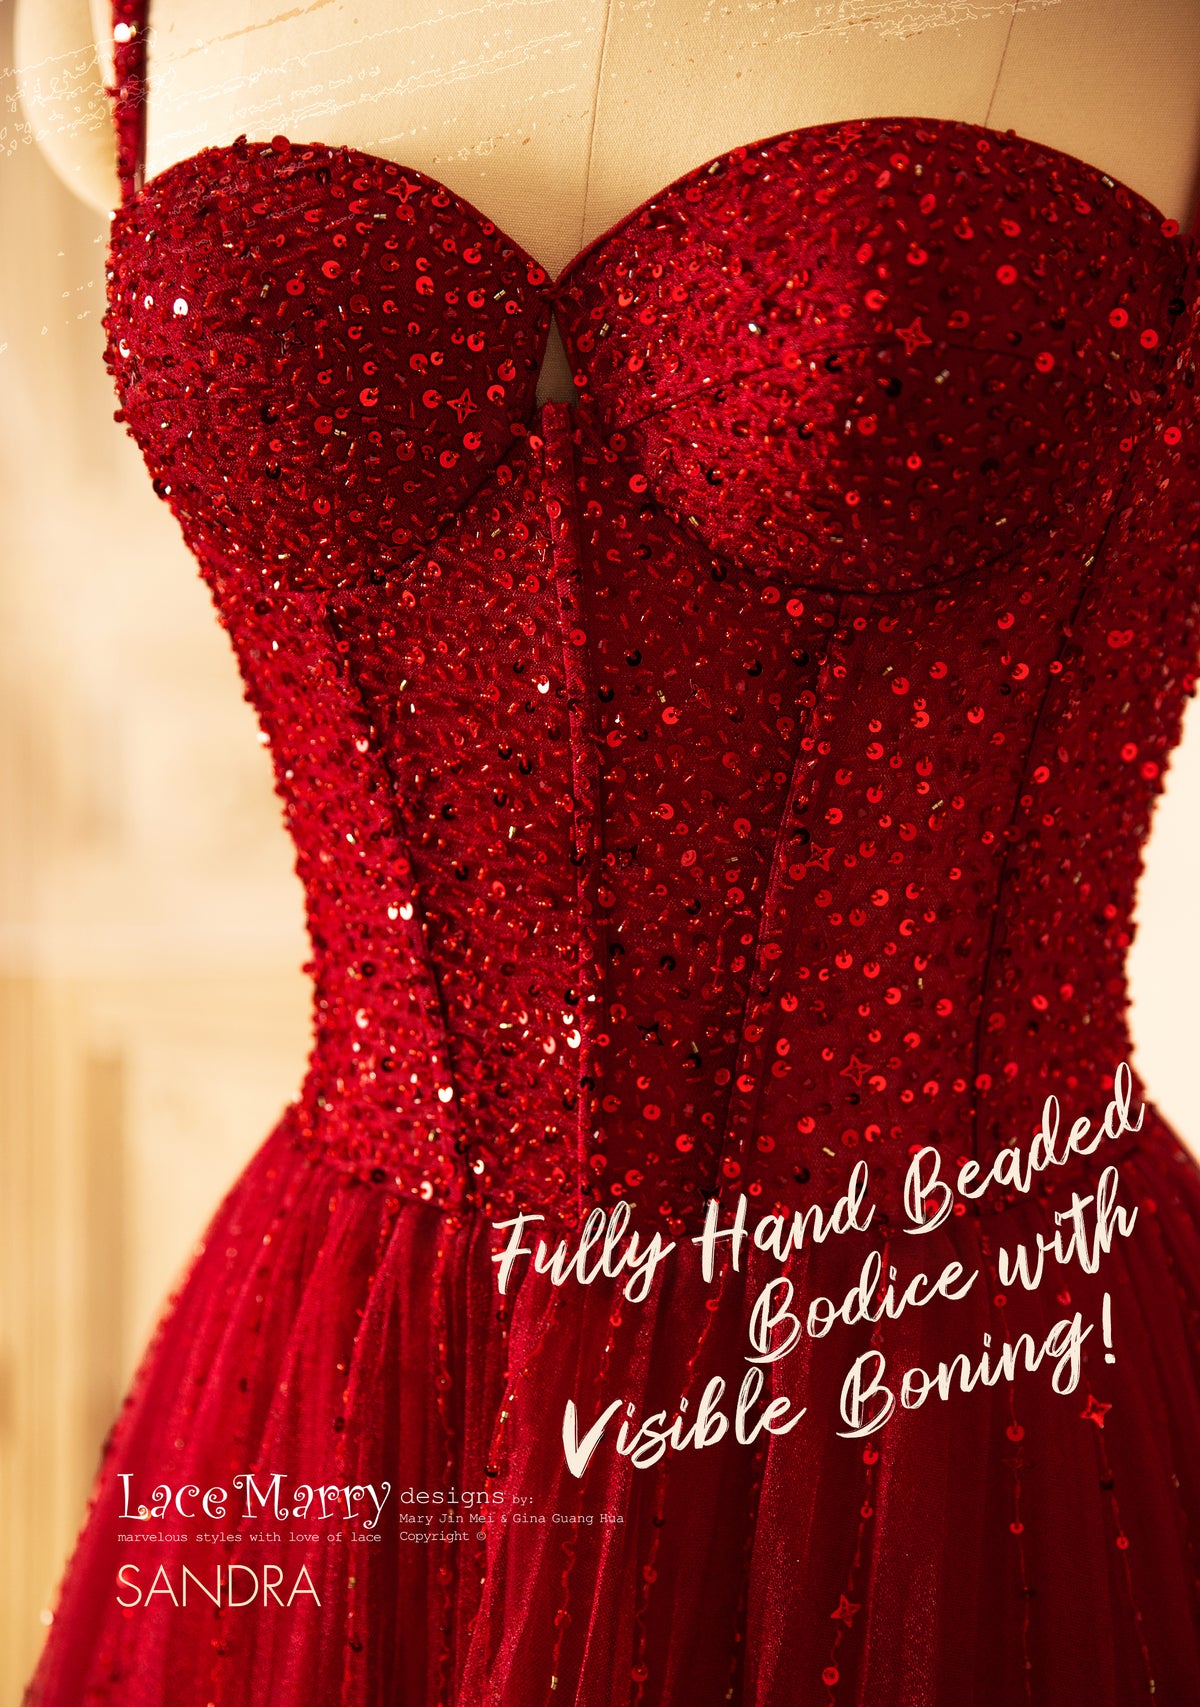 SANDRA / Red Wedding Dress with Sweetheart Neckline